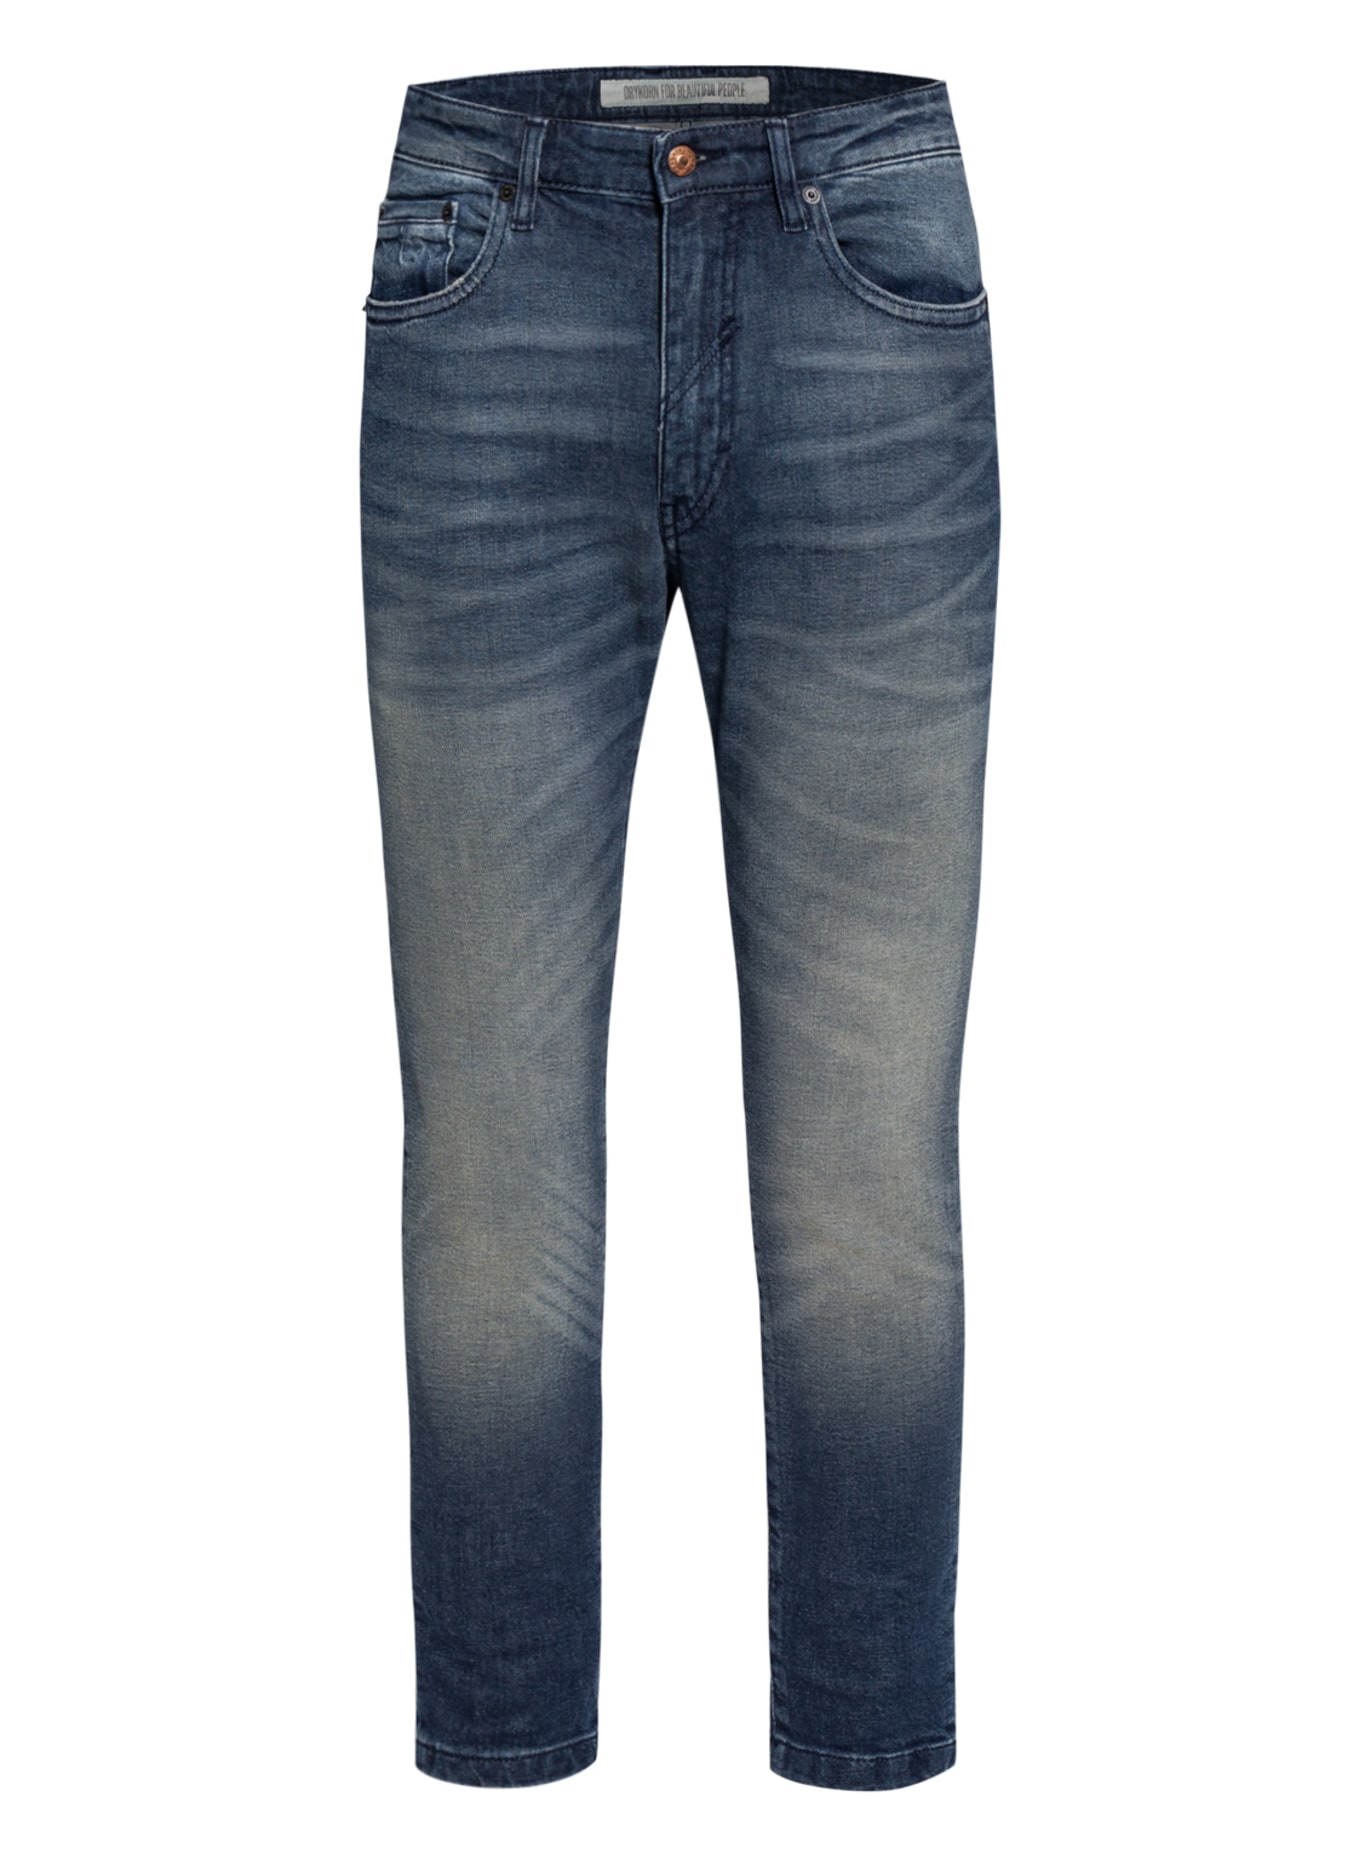 DRYKORN Jeans WEST Slim Fit, Farbe: 3210 blau (Bild 1)